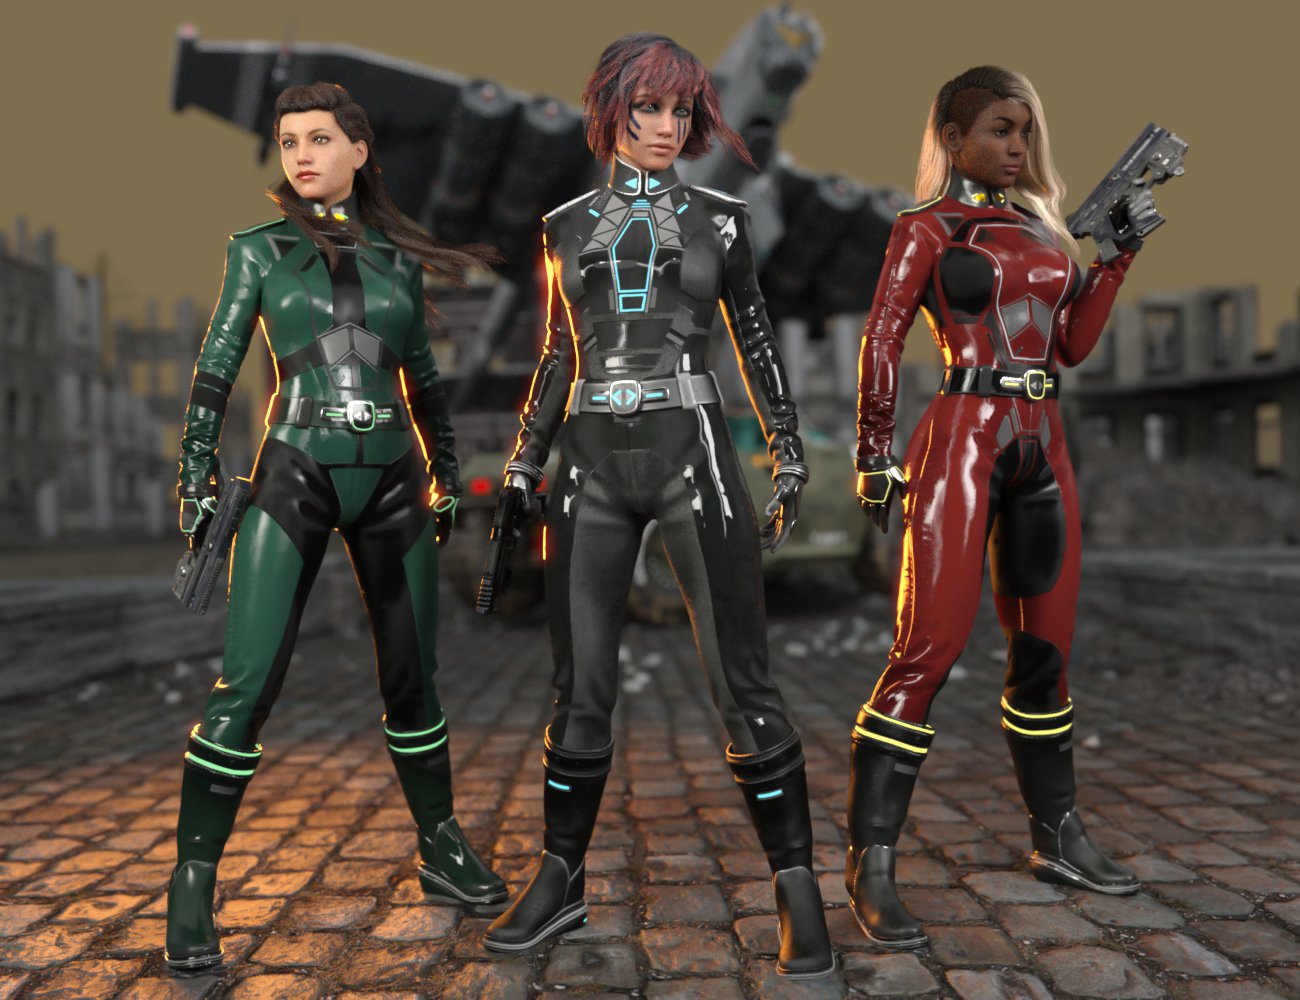 Sci-Fi Commander Outfit for Genesis 8 Female(s) by: Yura, 3D Models by Daz 3D